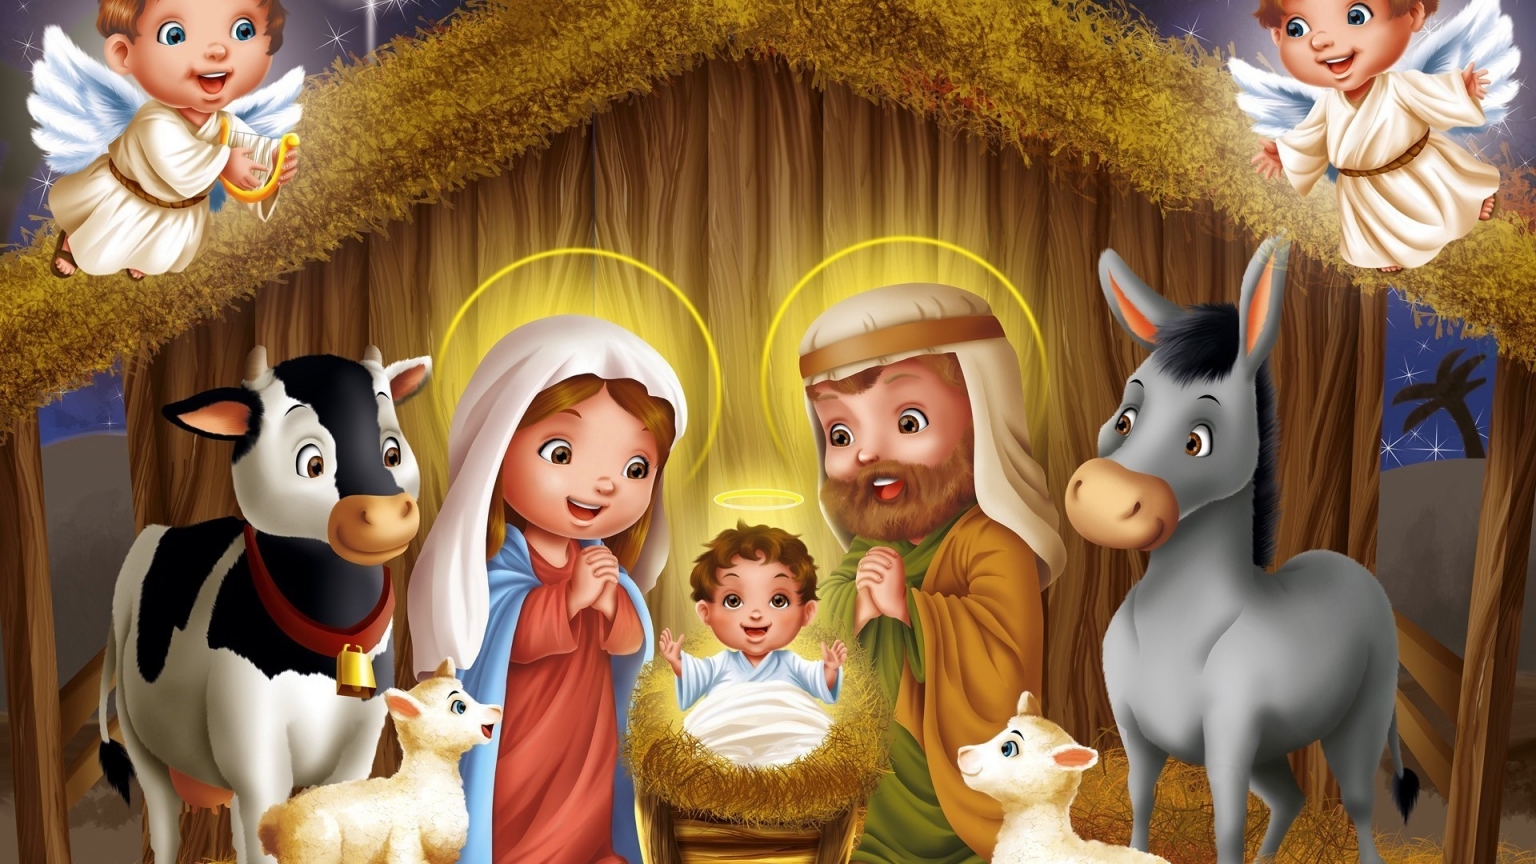 Story Birth of Jesus Christ for 1536 x 864 HDTV resolution